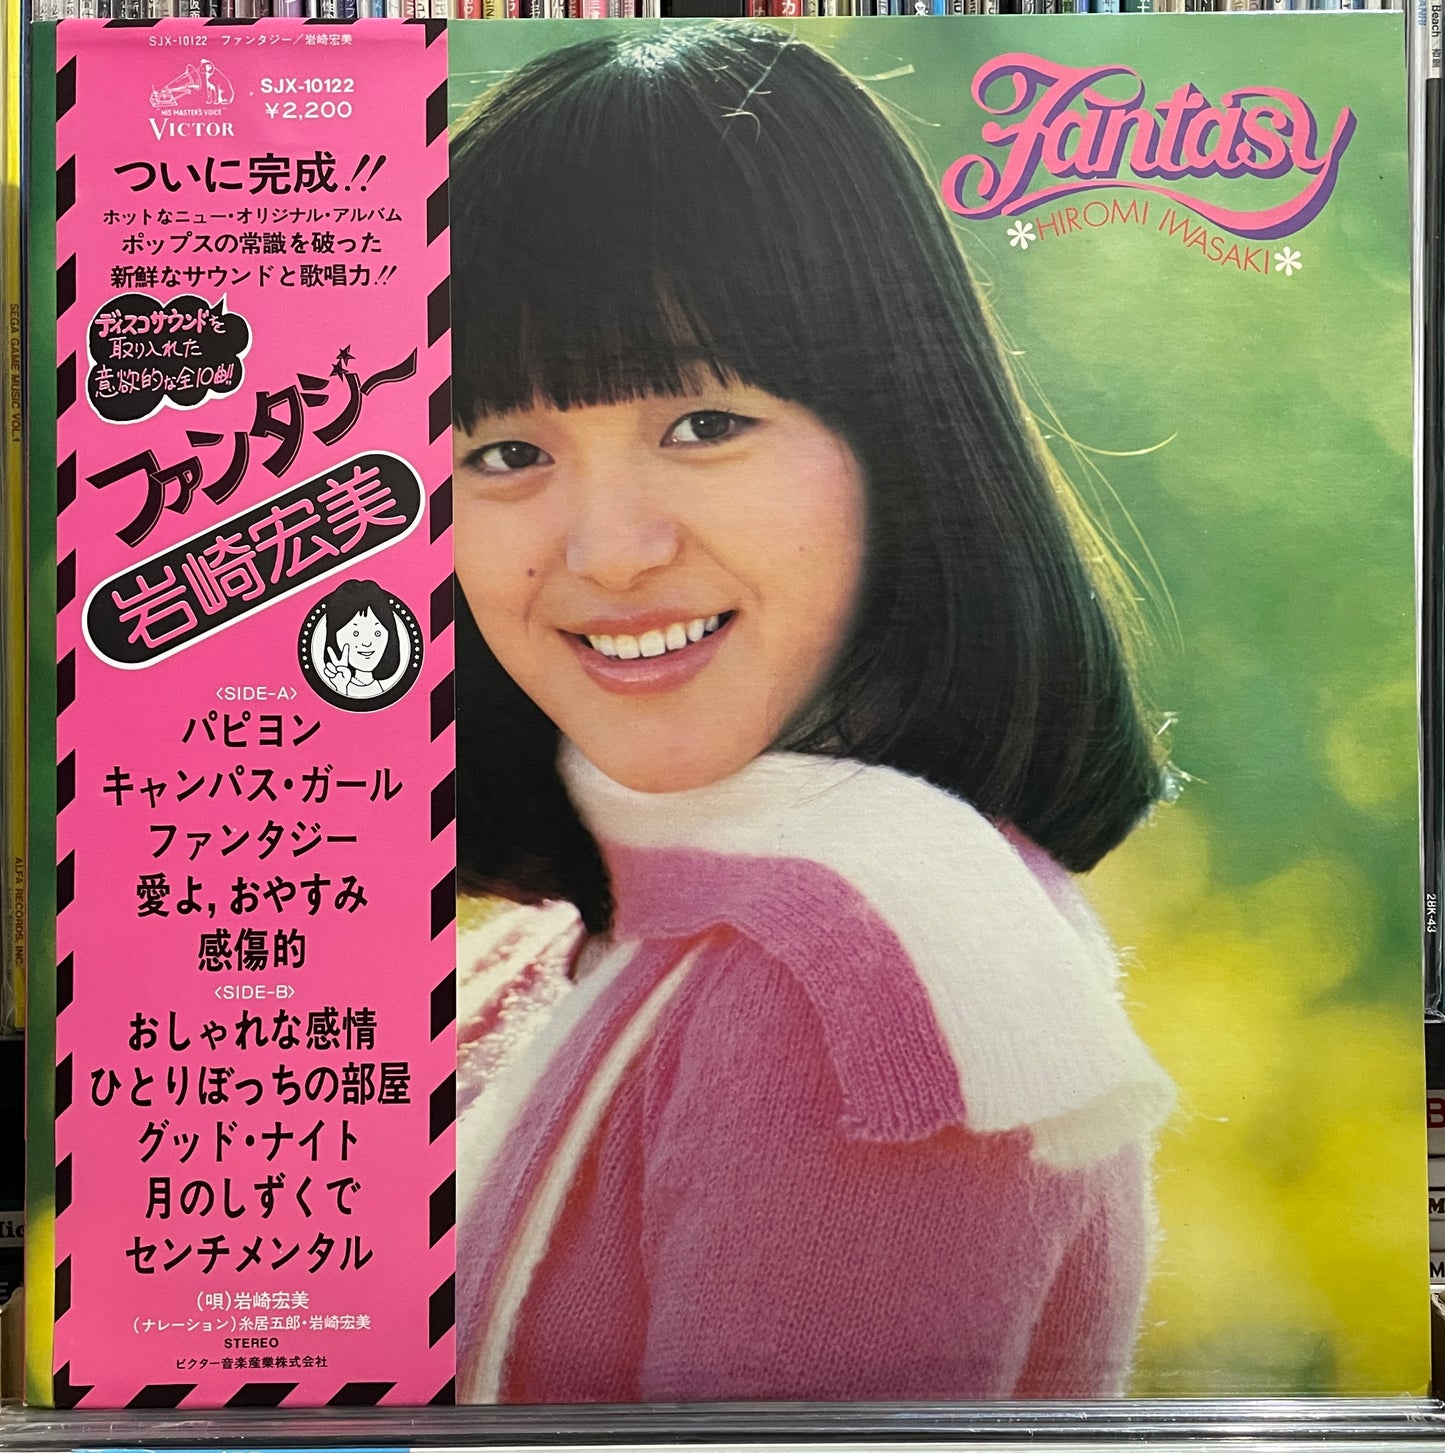 Hiromi Iwasaki "Fantasy" (1976)